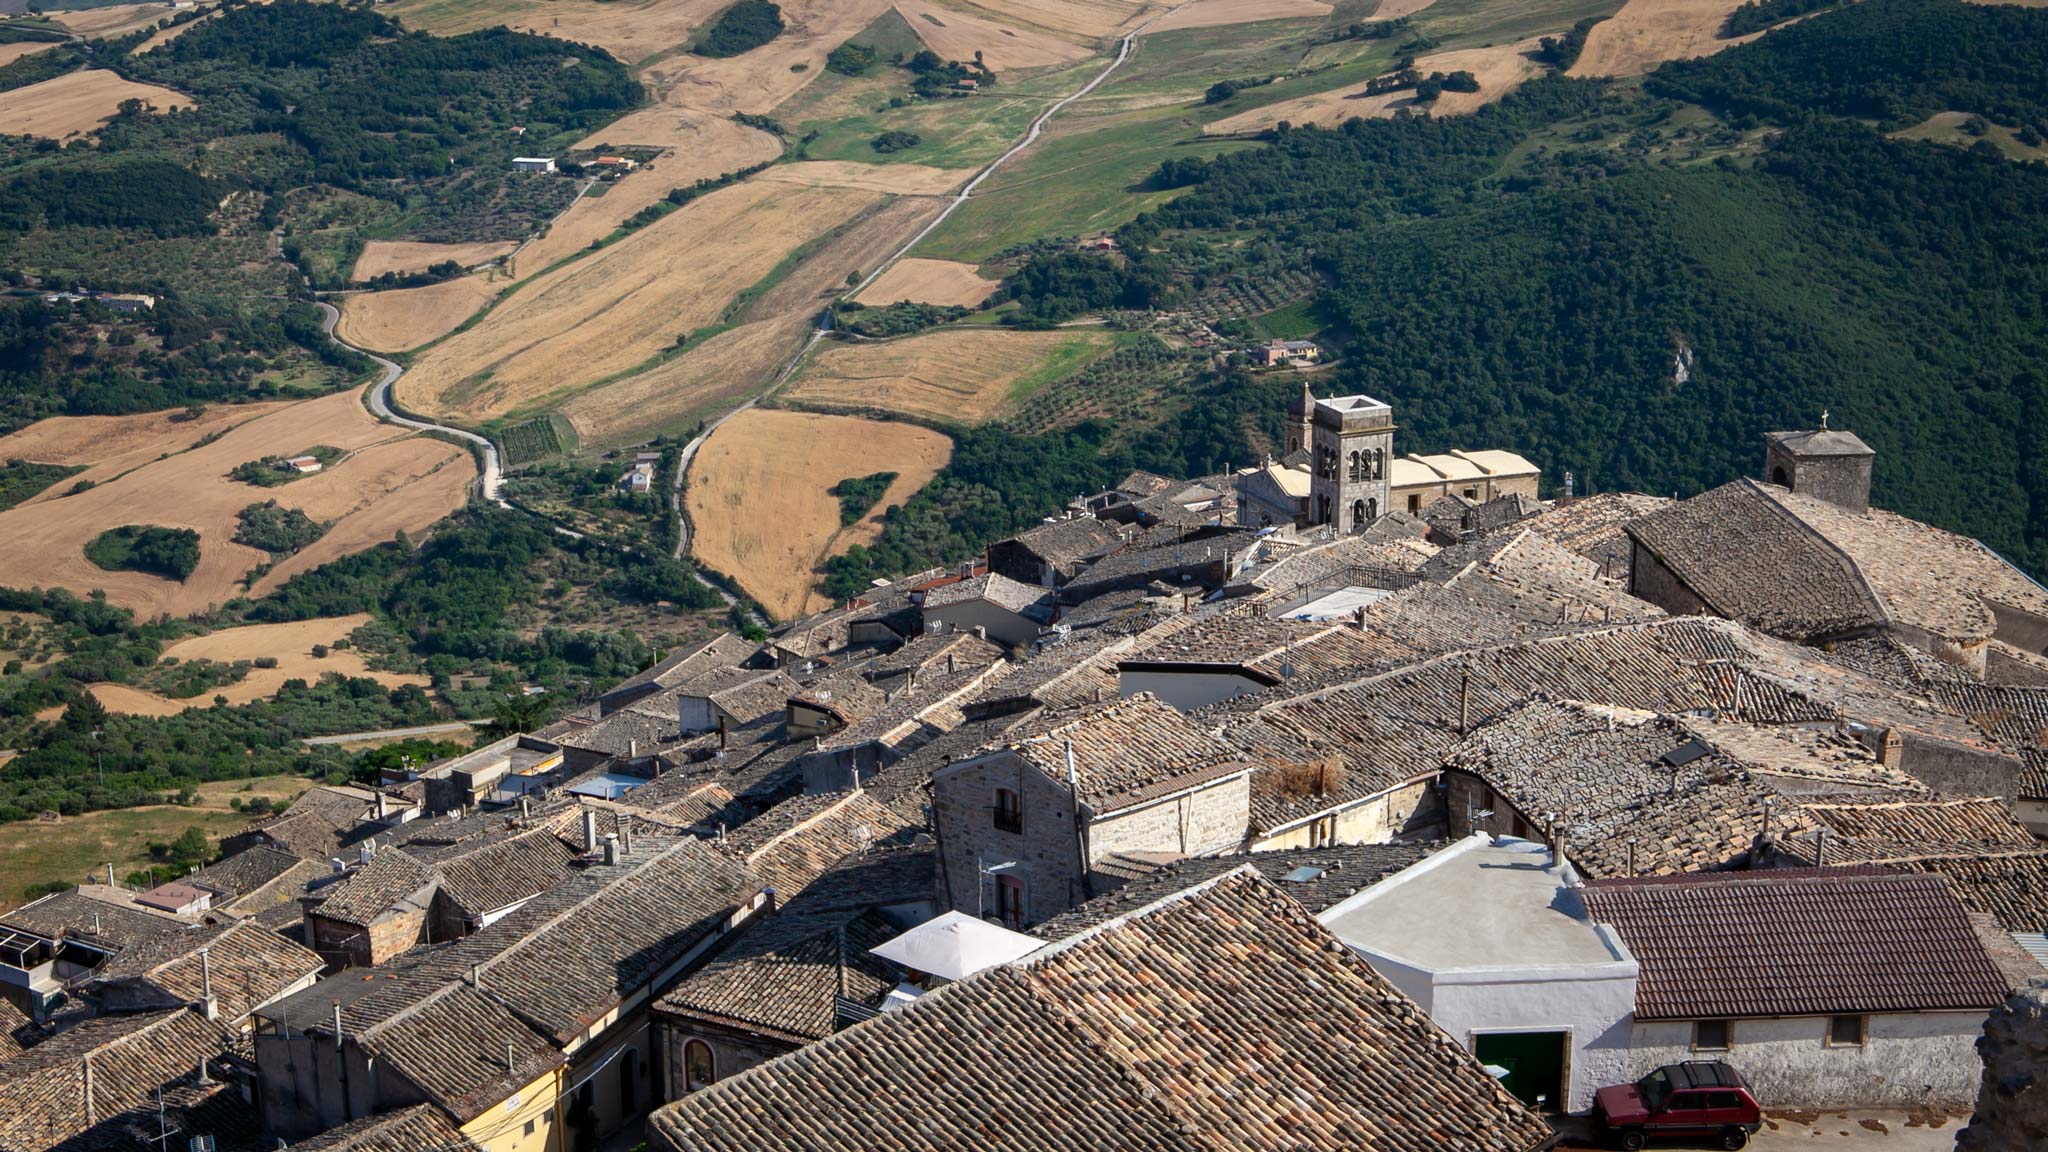 Sant'Agata di Puglia镇的屋顶，背景是绿色的山丘